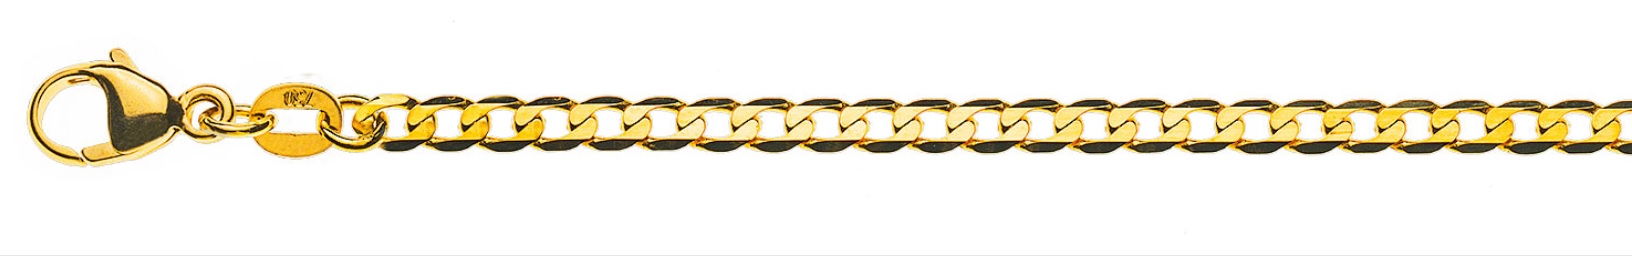 AURONOS Prestige Necklace yellow gold 18K curb chain extra flat diamond 60cm 3.1mm